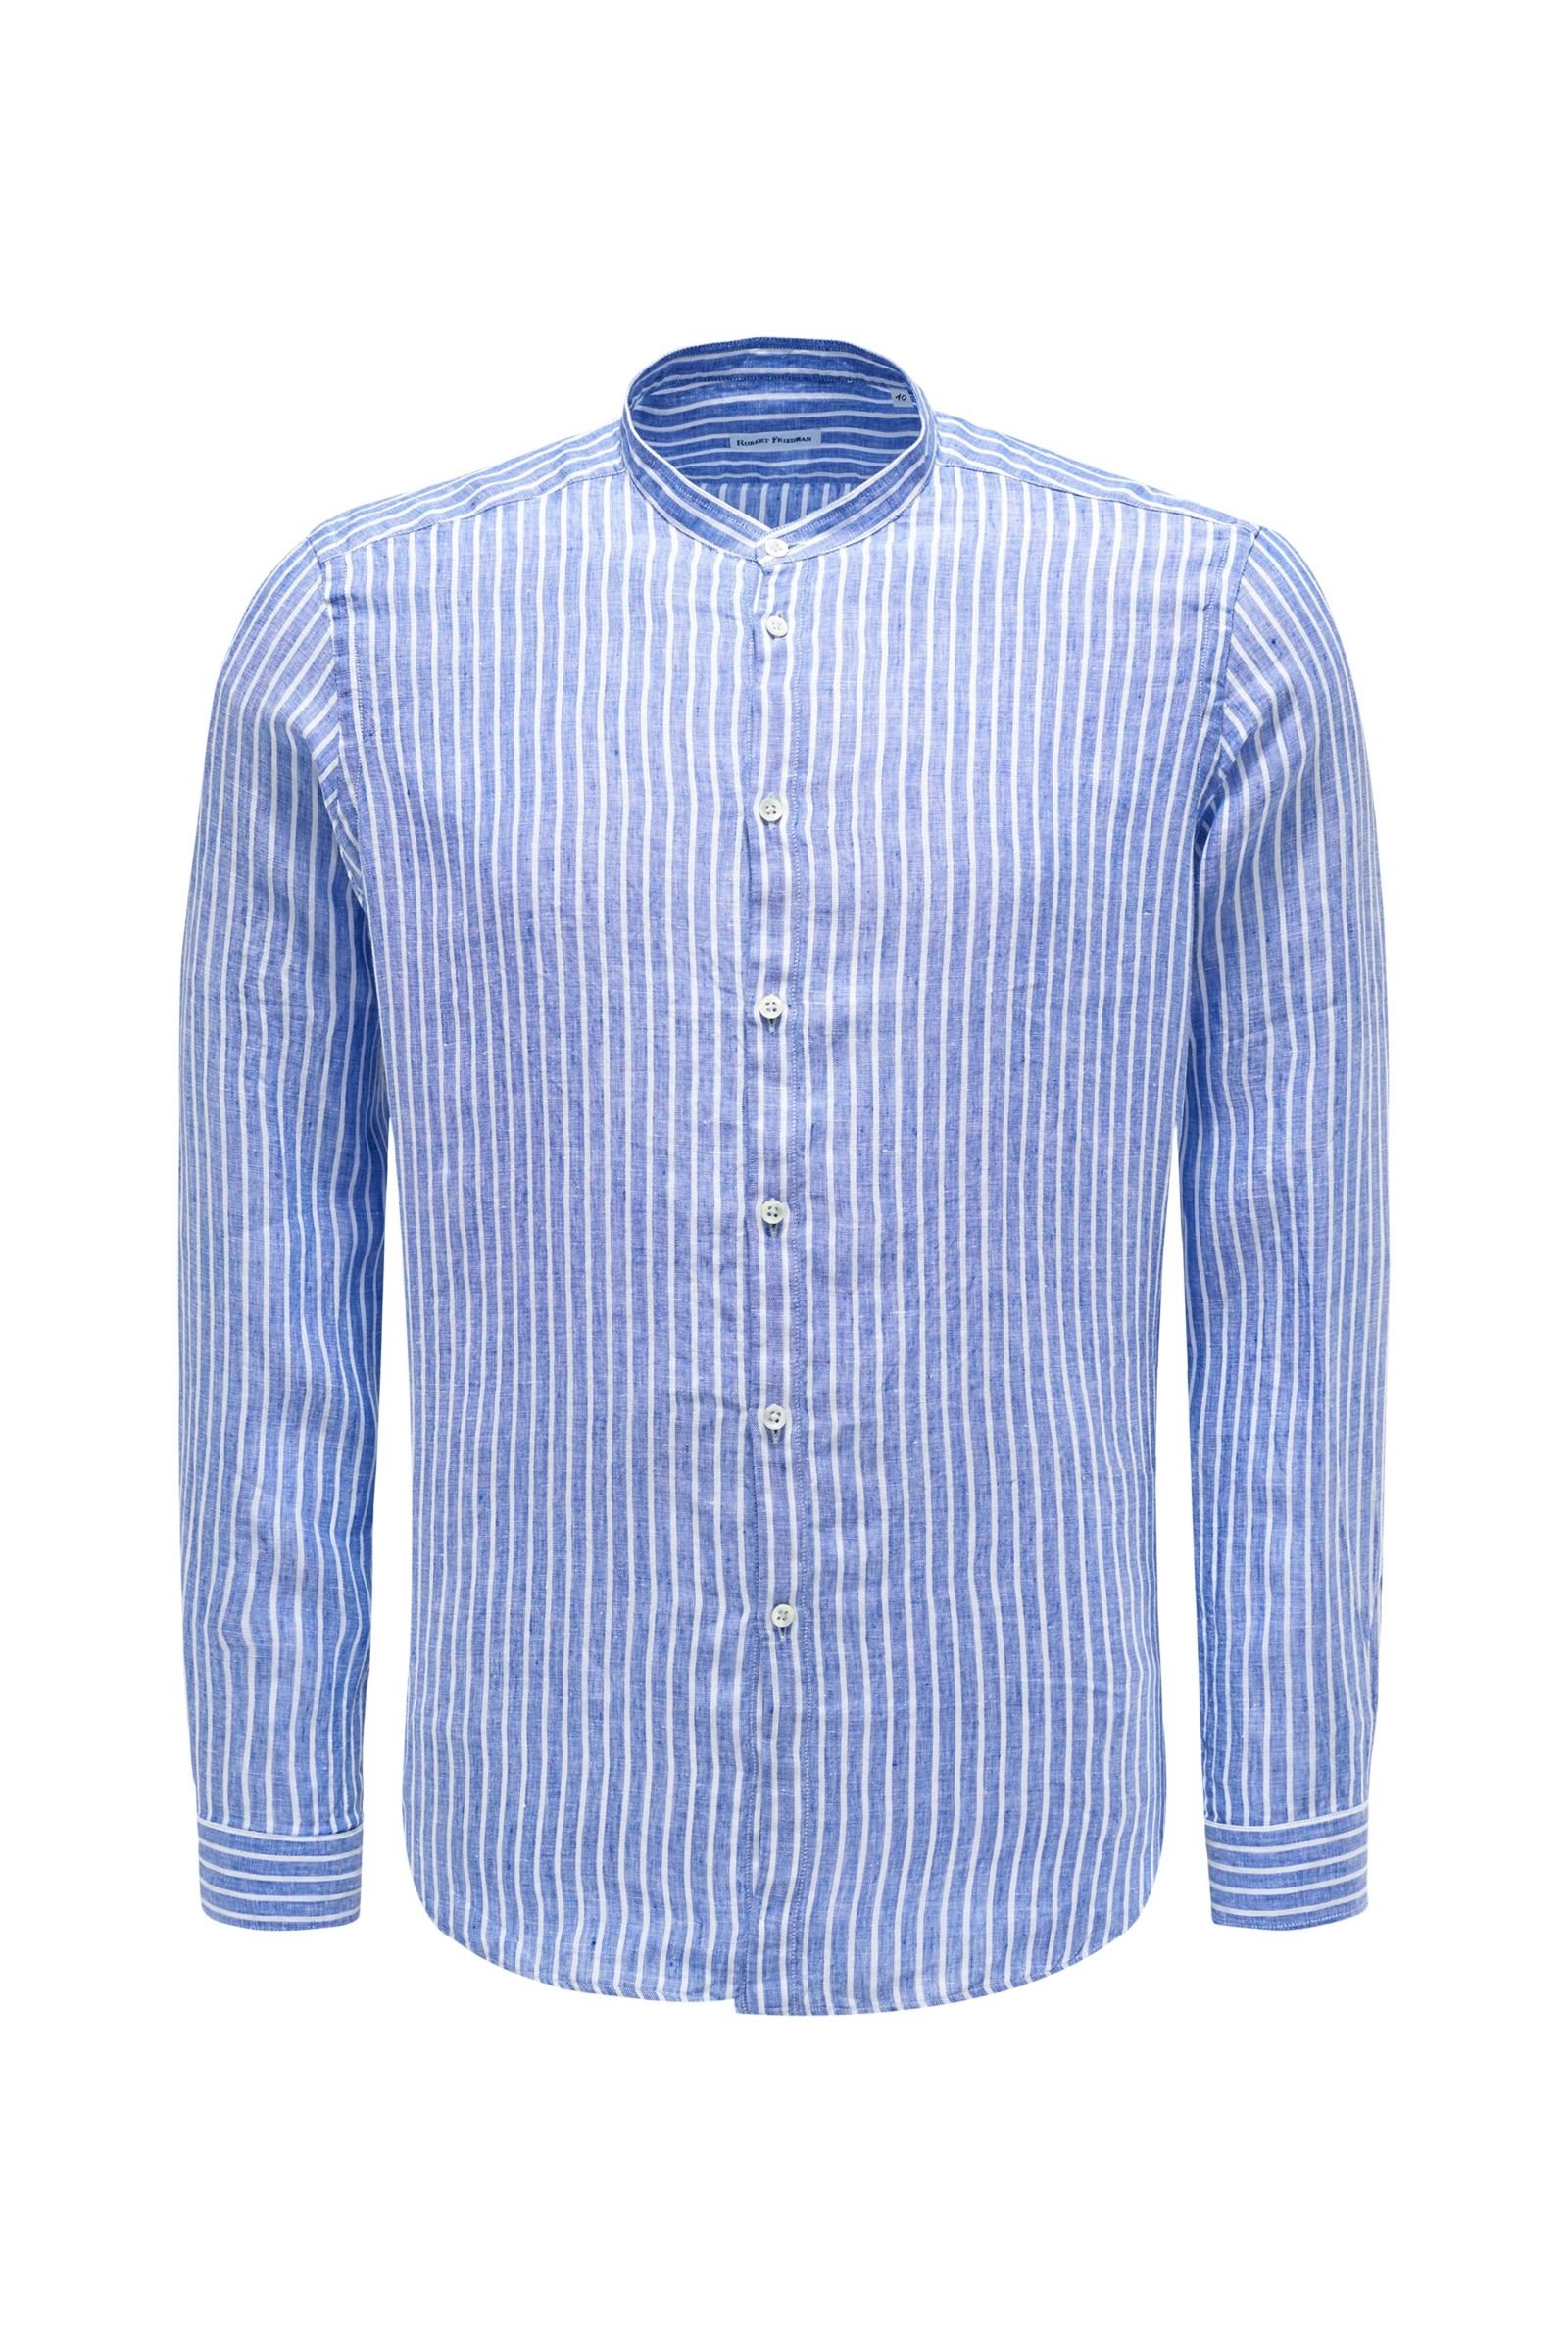 Linen shirt 'Tokio' grandad collar blue/white striped